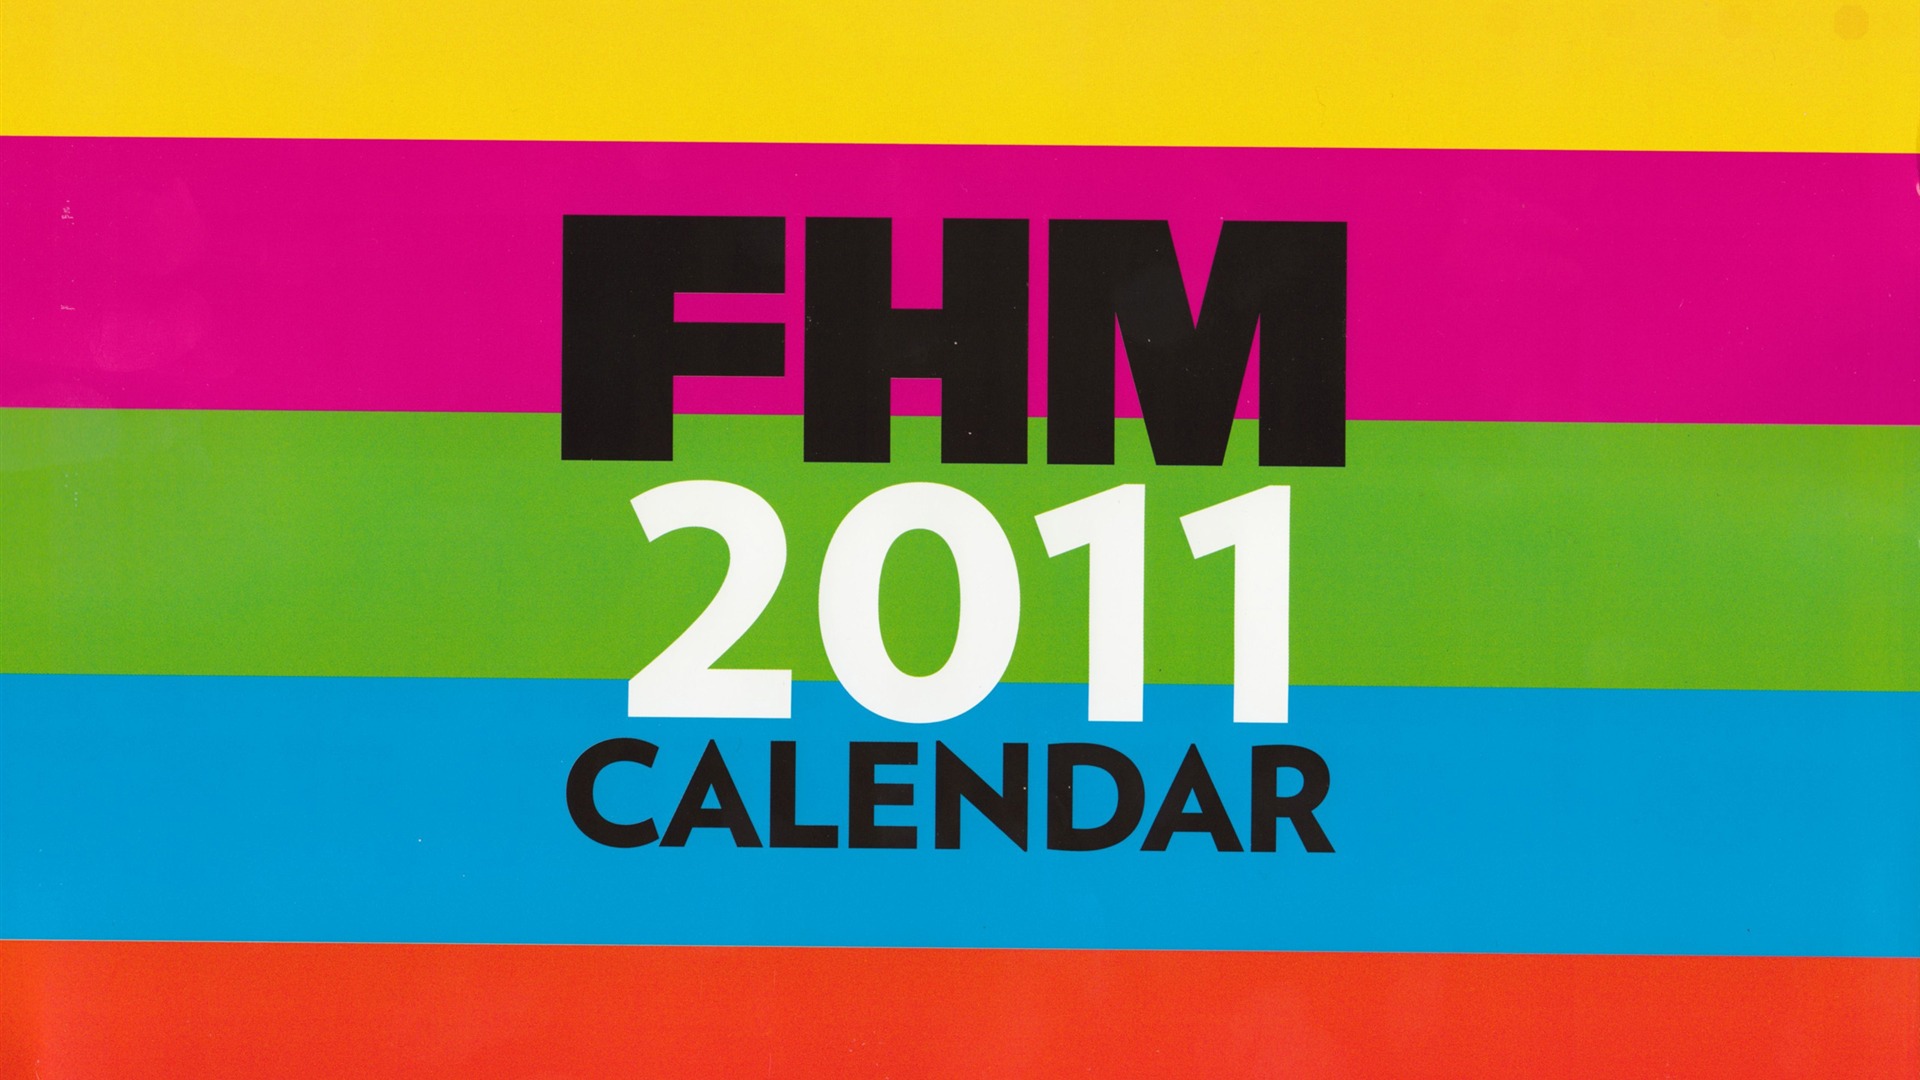 FHM Calendar 2011 wallpaper actress (2) #13 - 1920x1080